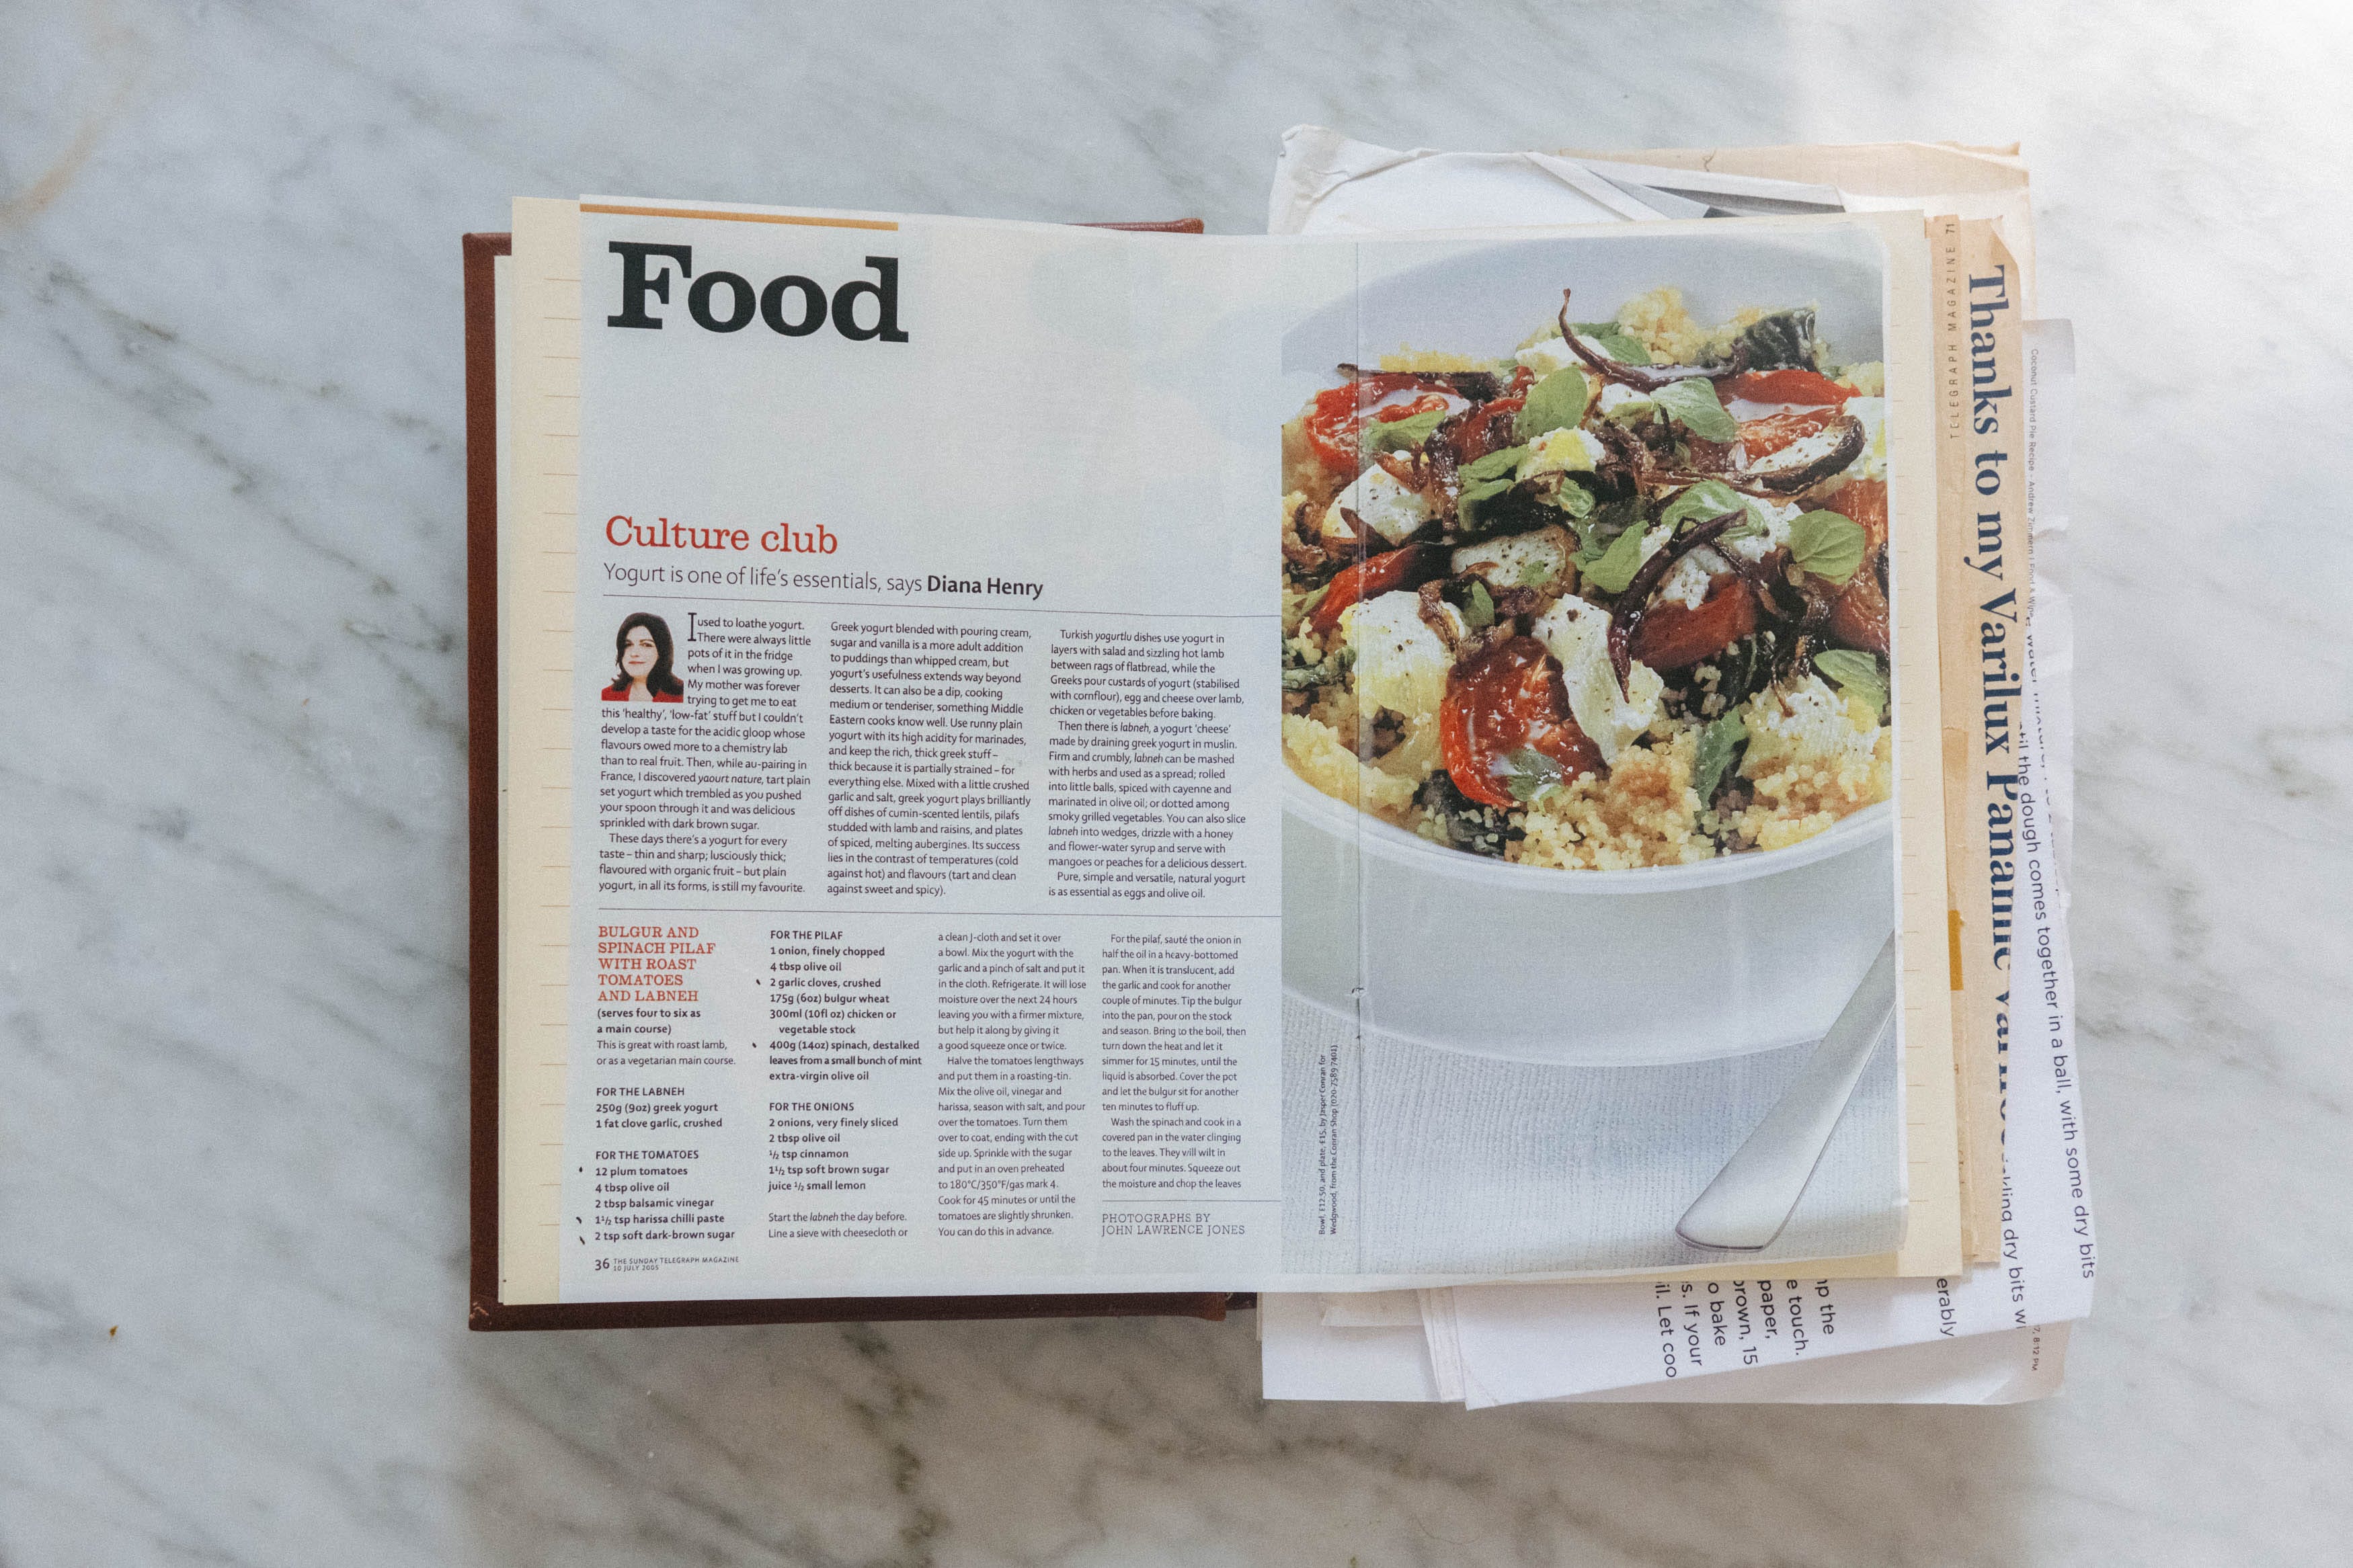 Pasta With Gorgonzola and Arugula Recipe - NYT Cooking